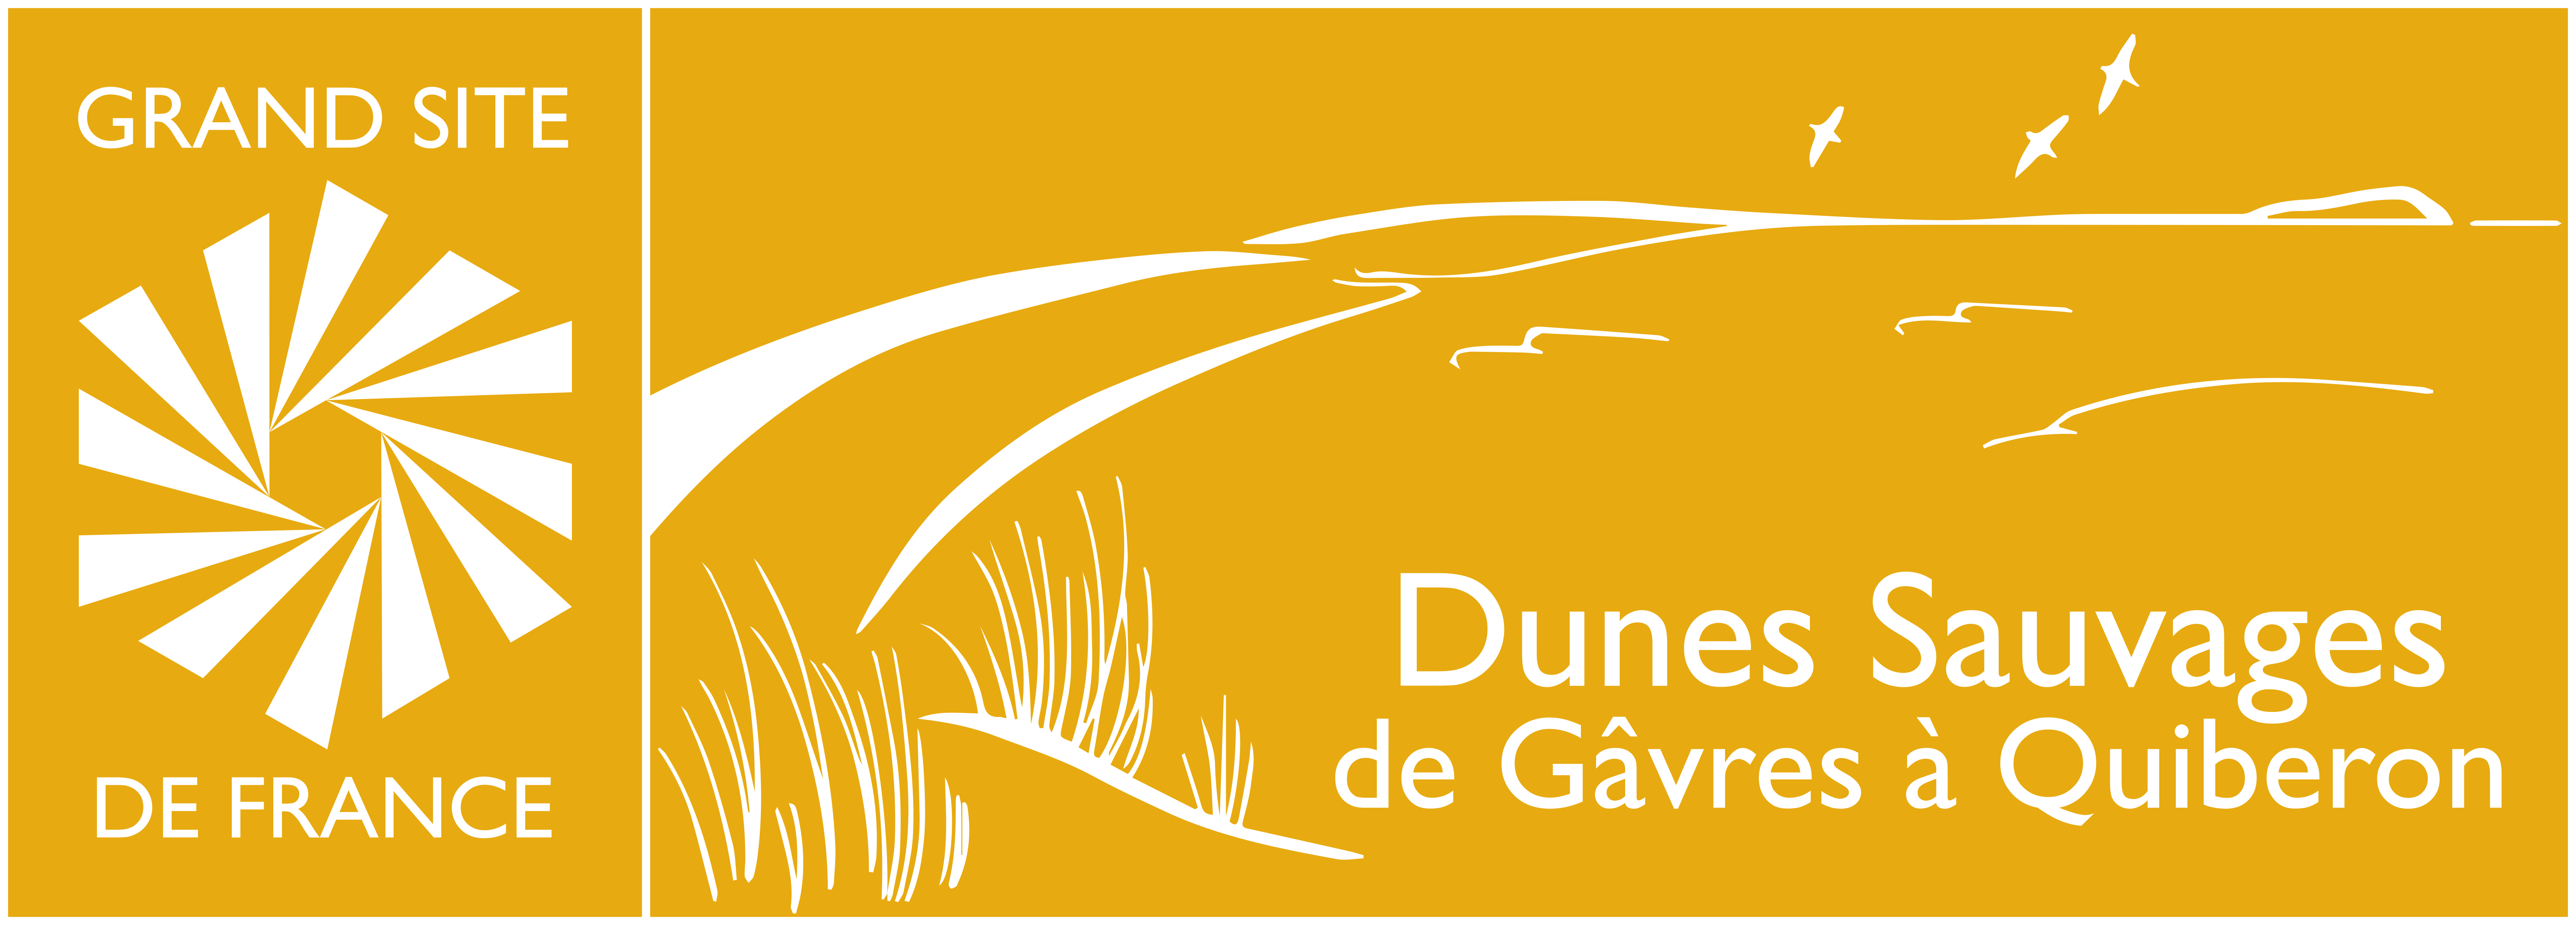 cartouche dunes sauvages gavres quiberon